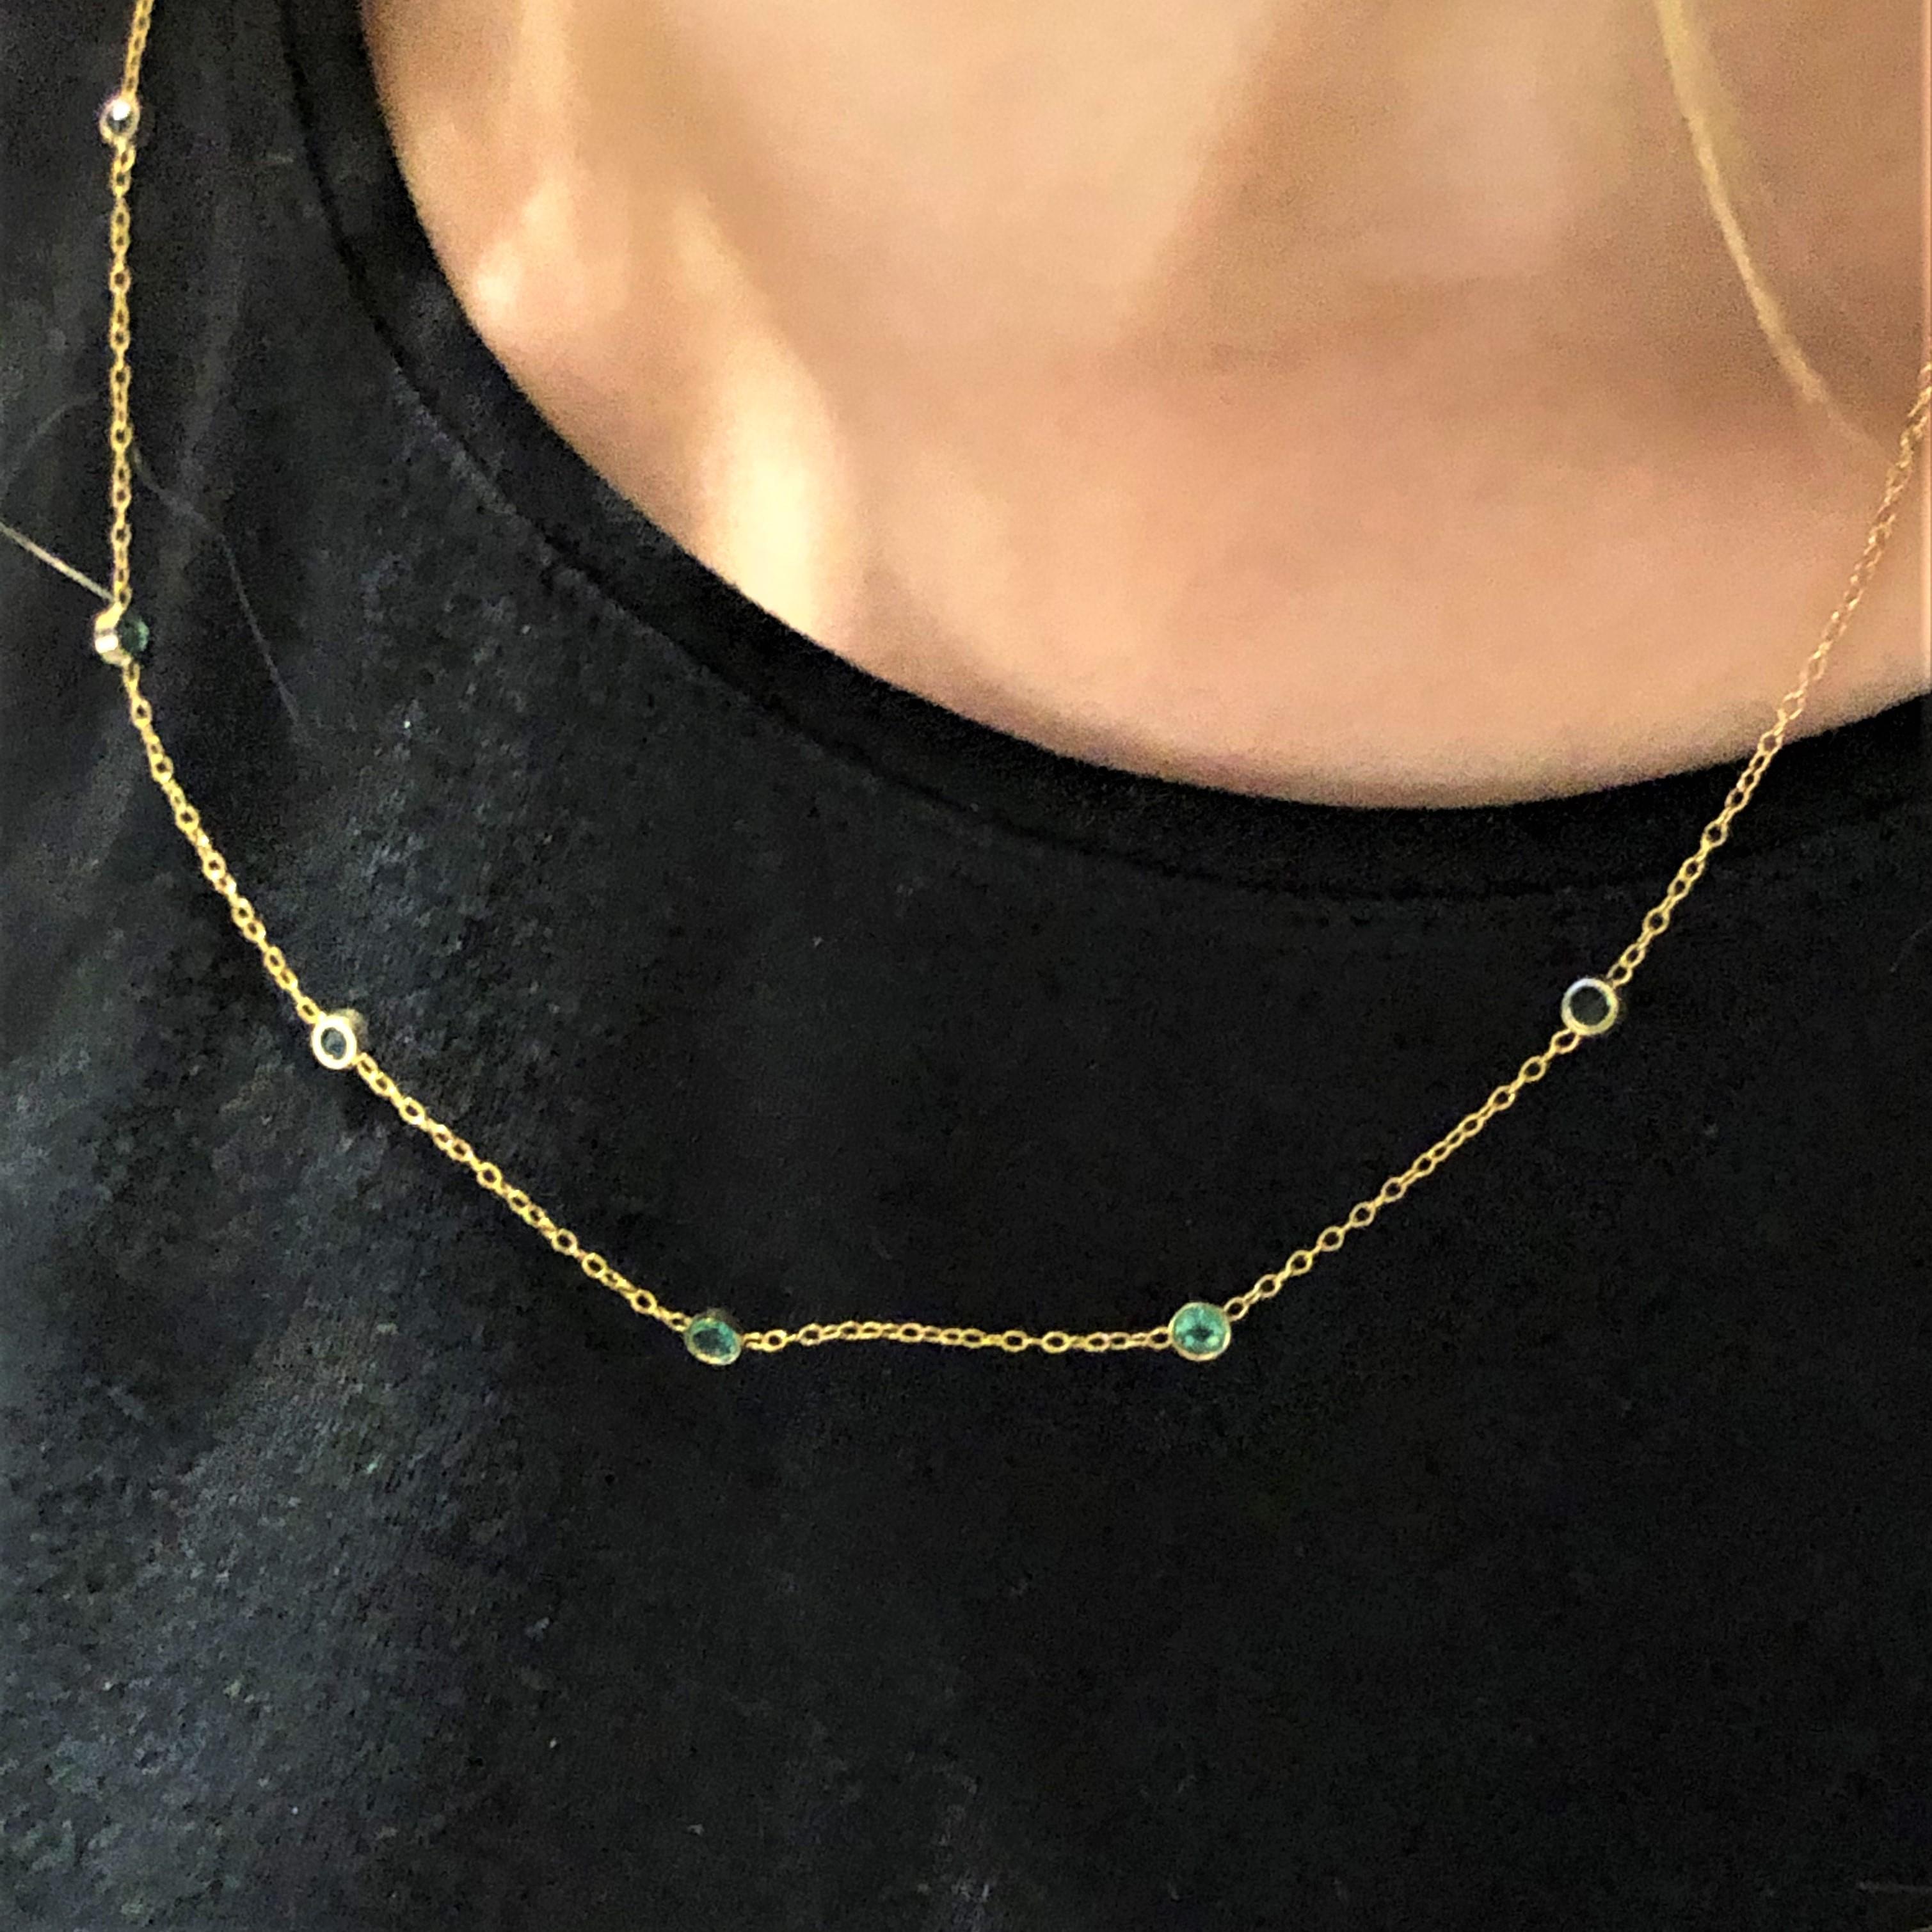 Women's or Men's Seven Bezel-Set Emerald in Yellow Gold Necklace Weighing 1.15 Carat